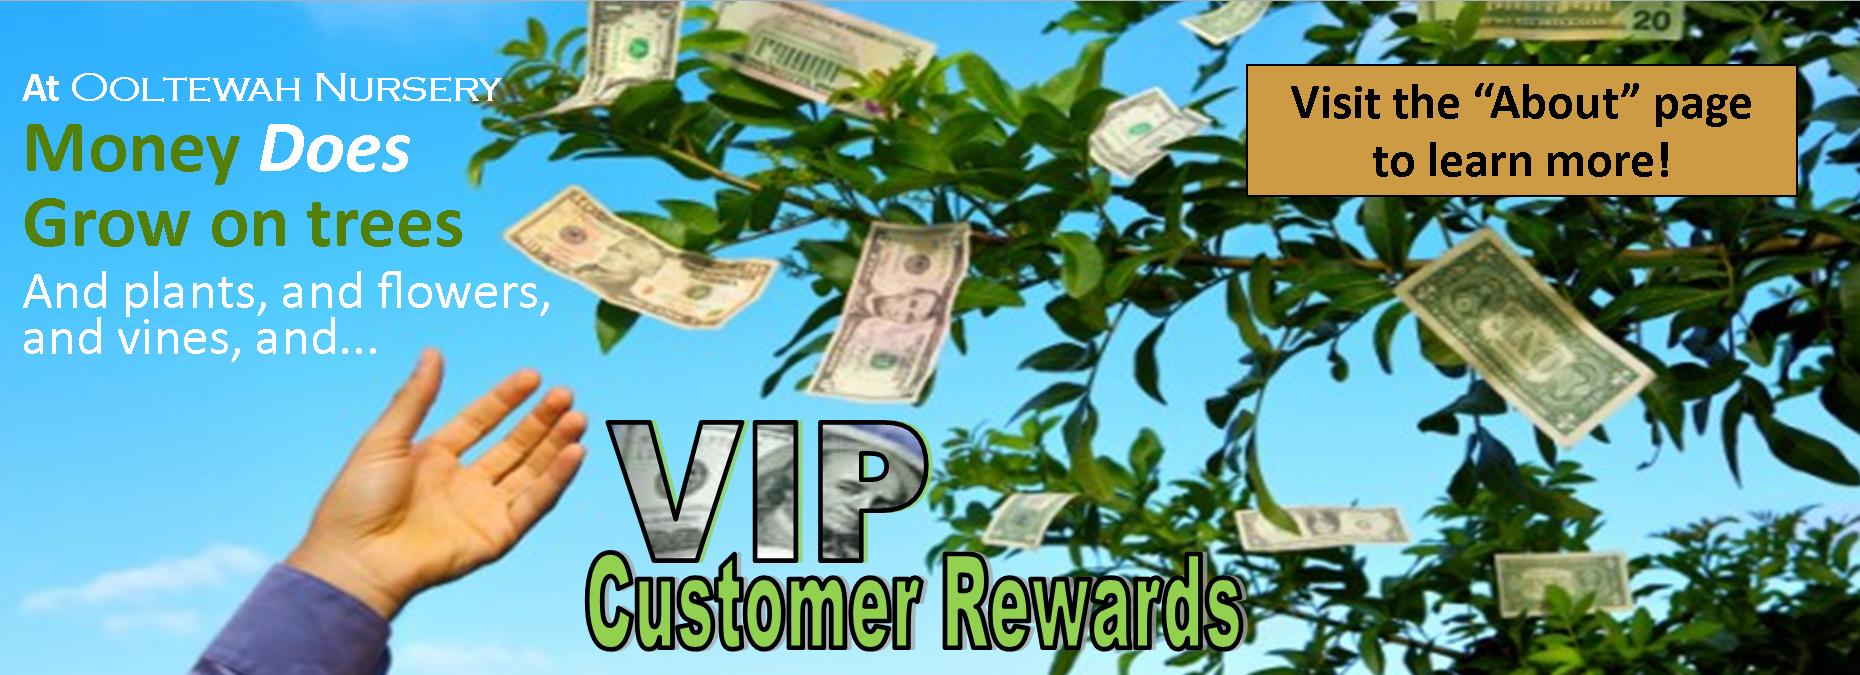 assets/Uploads/VIP-Rewards22.jpg